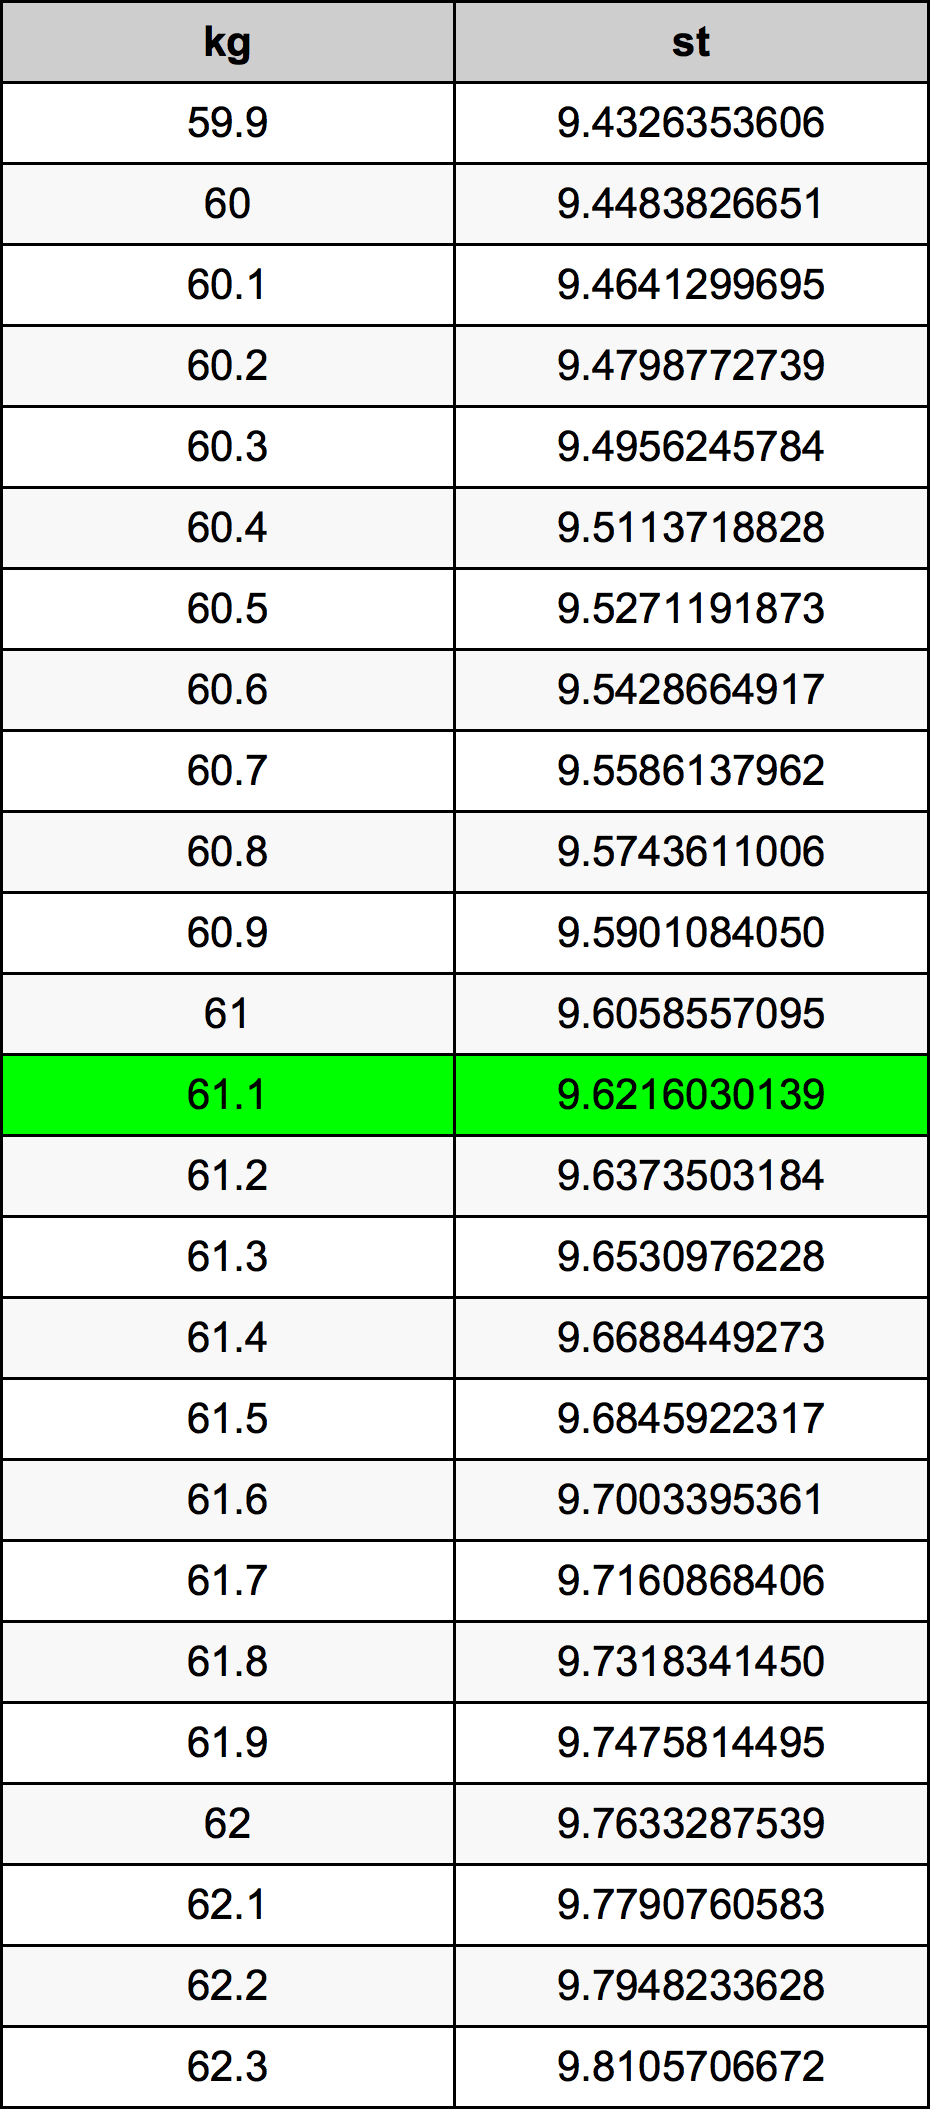 61.1 Kilogramma konverżjoni tabella